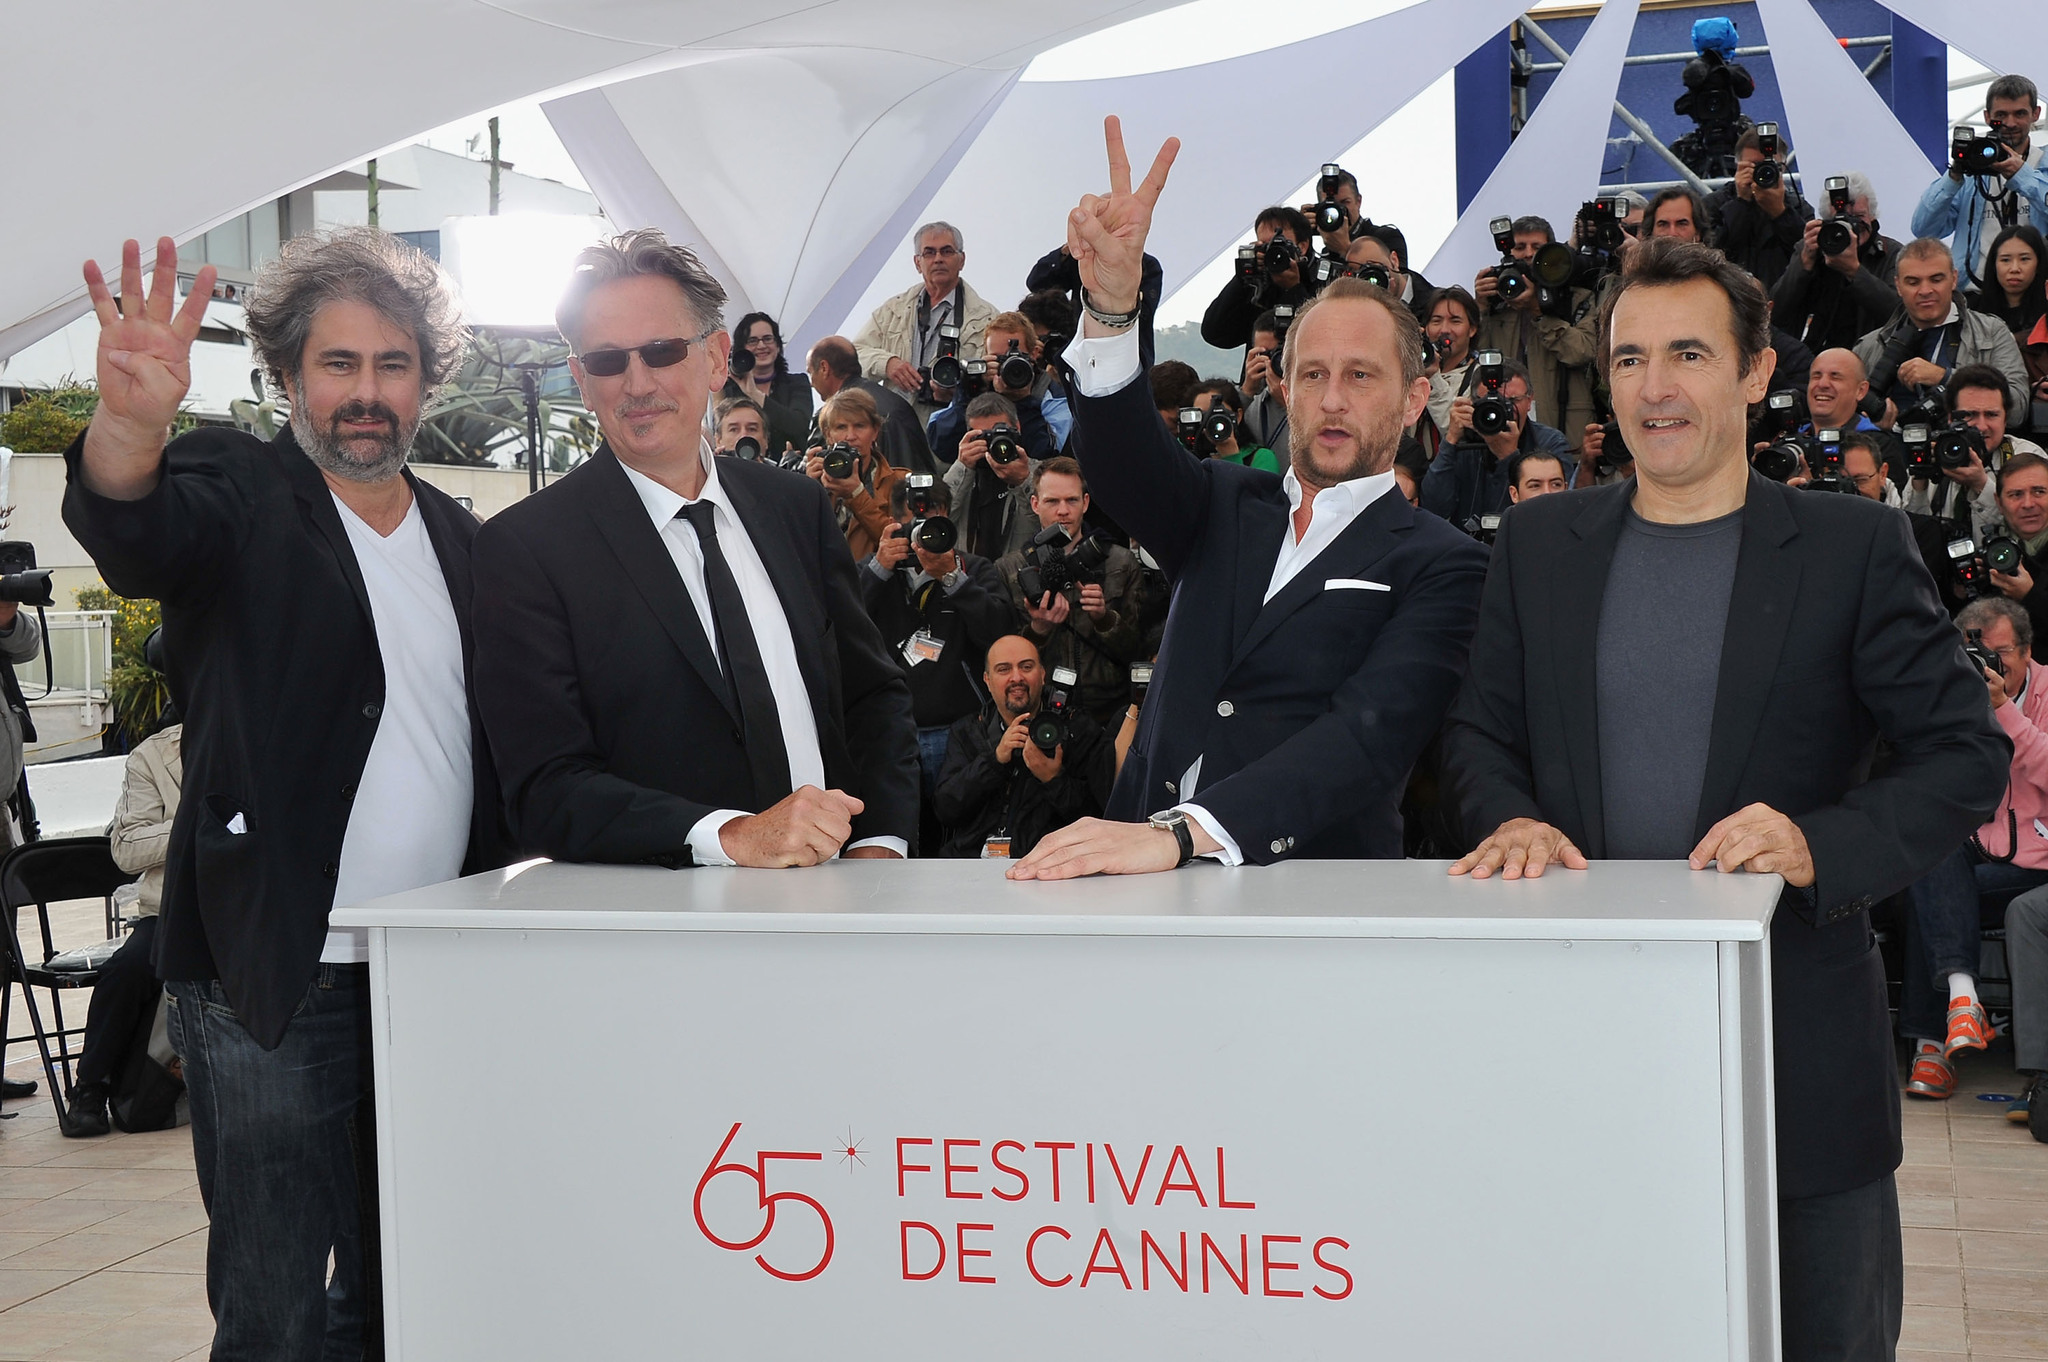 Benoît Delépine, Albert Dupontel, Benoît Poelvoorde and Gustave Kervern at event of Le grand soir (2012)